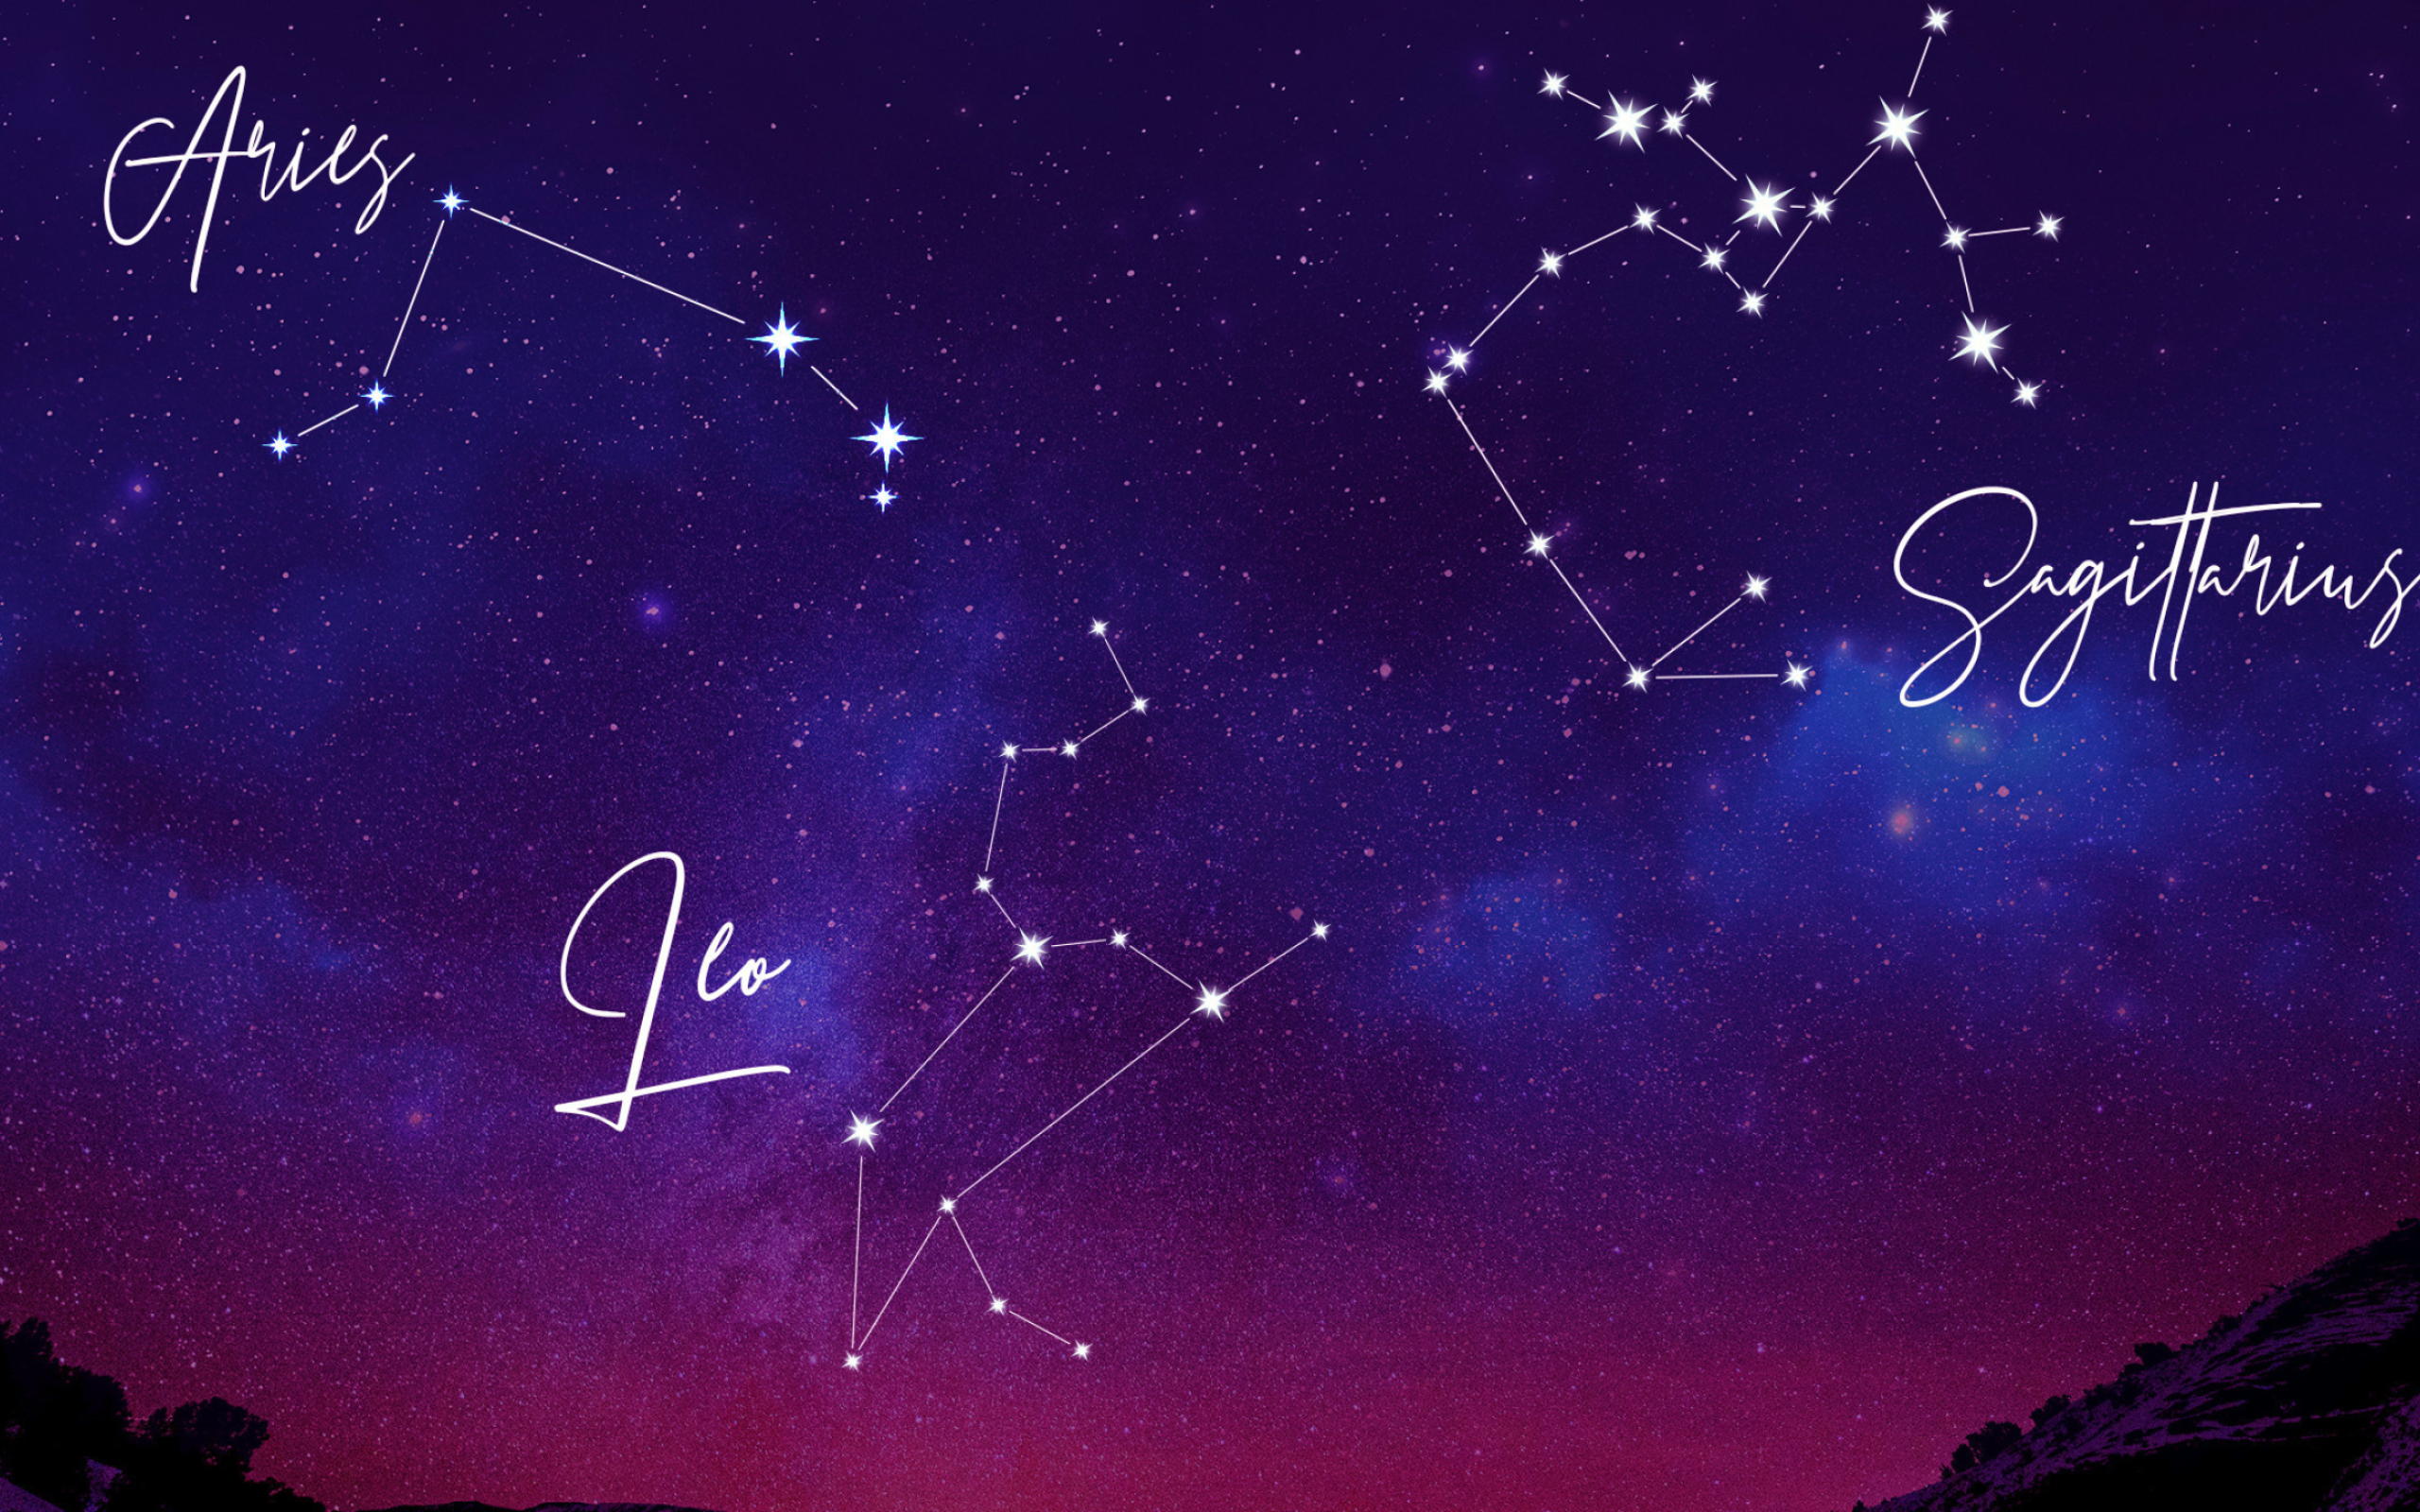 HD wallpaper, Constellation Wallpaper, Astrological Patterns, Desktop Hd Aries Zodiac Sign Background Image, Starry Backgrounds, Celestial Beauty, 2560X1600 Hd Desktop